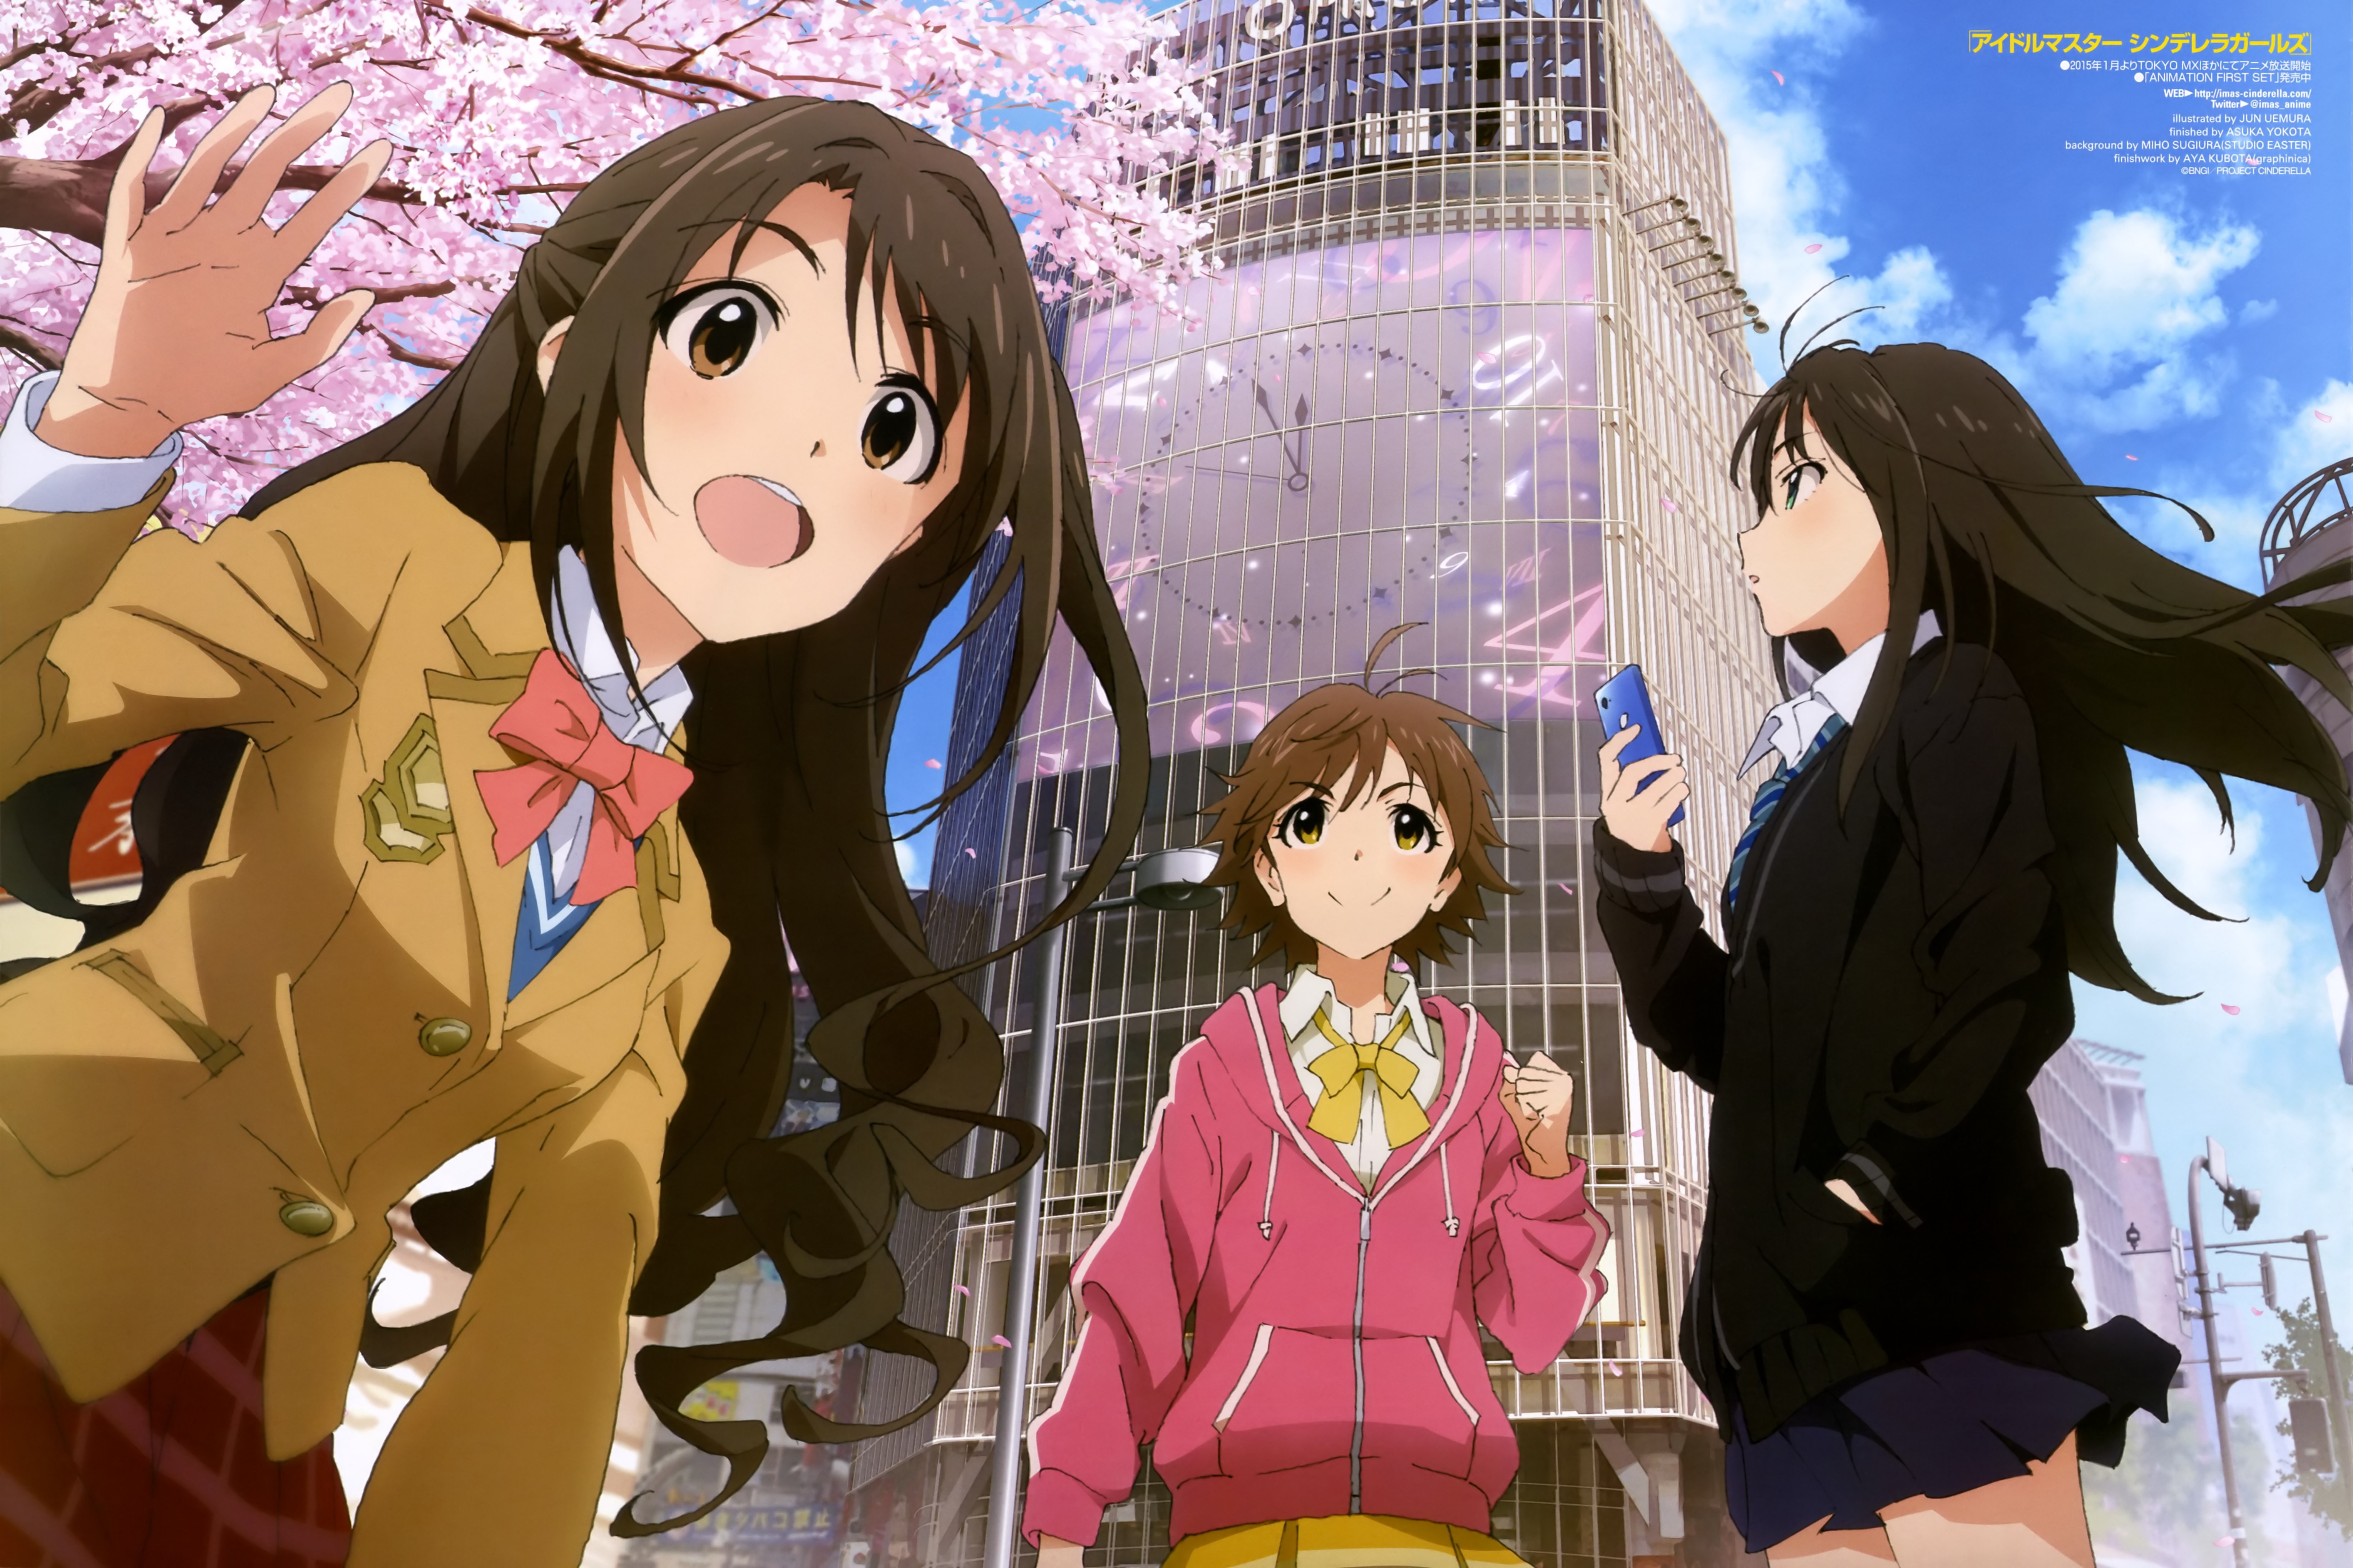 Anime 6112x4073 anime girls anime THE iDOLM@STER Shibuya Rin THE iDOLM@STER: Cinderella Girls women trio cherry blossom urban women outdoors outdoors brunette